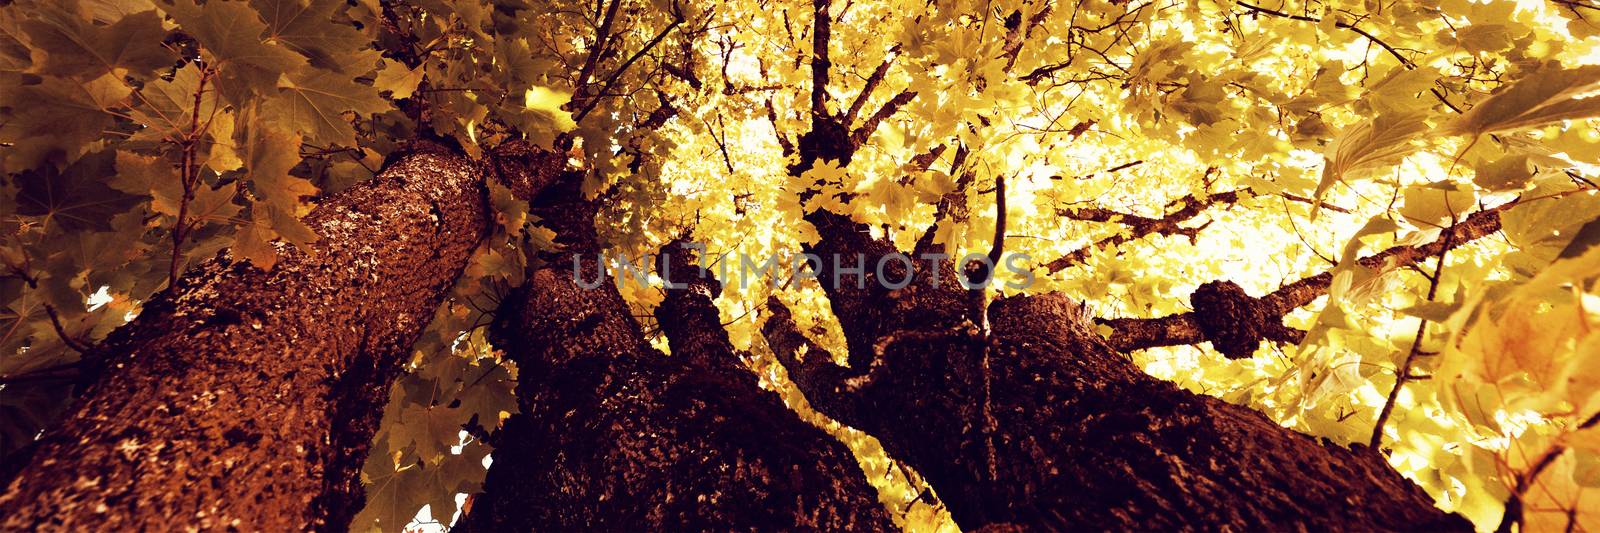  Leaves in a branch of tree by Wavebreakmedia